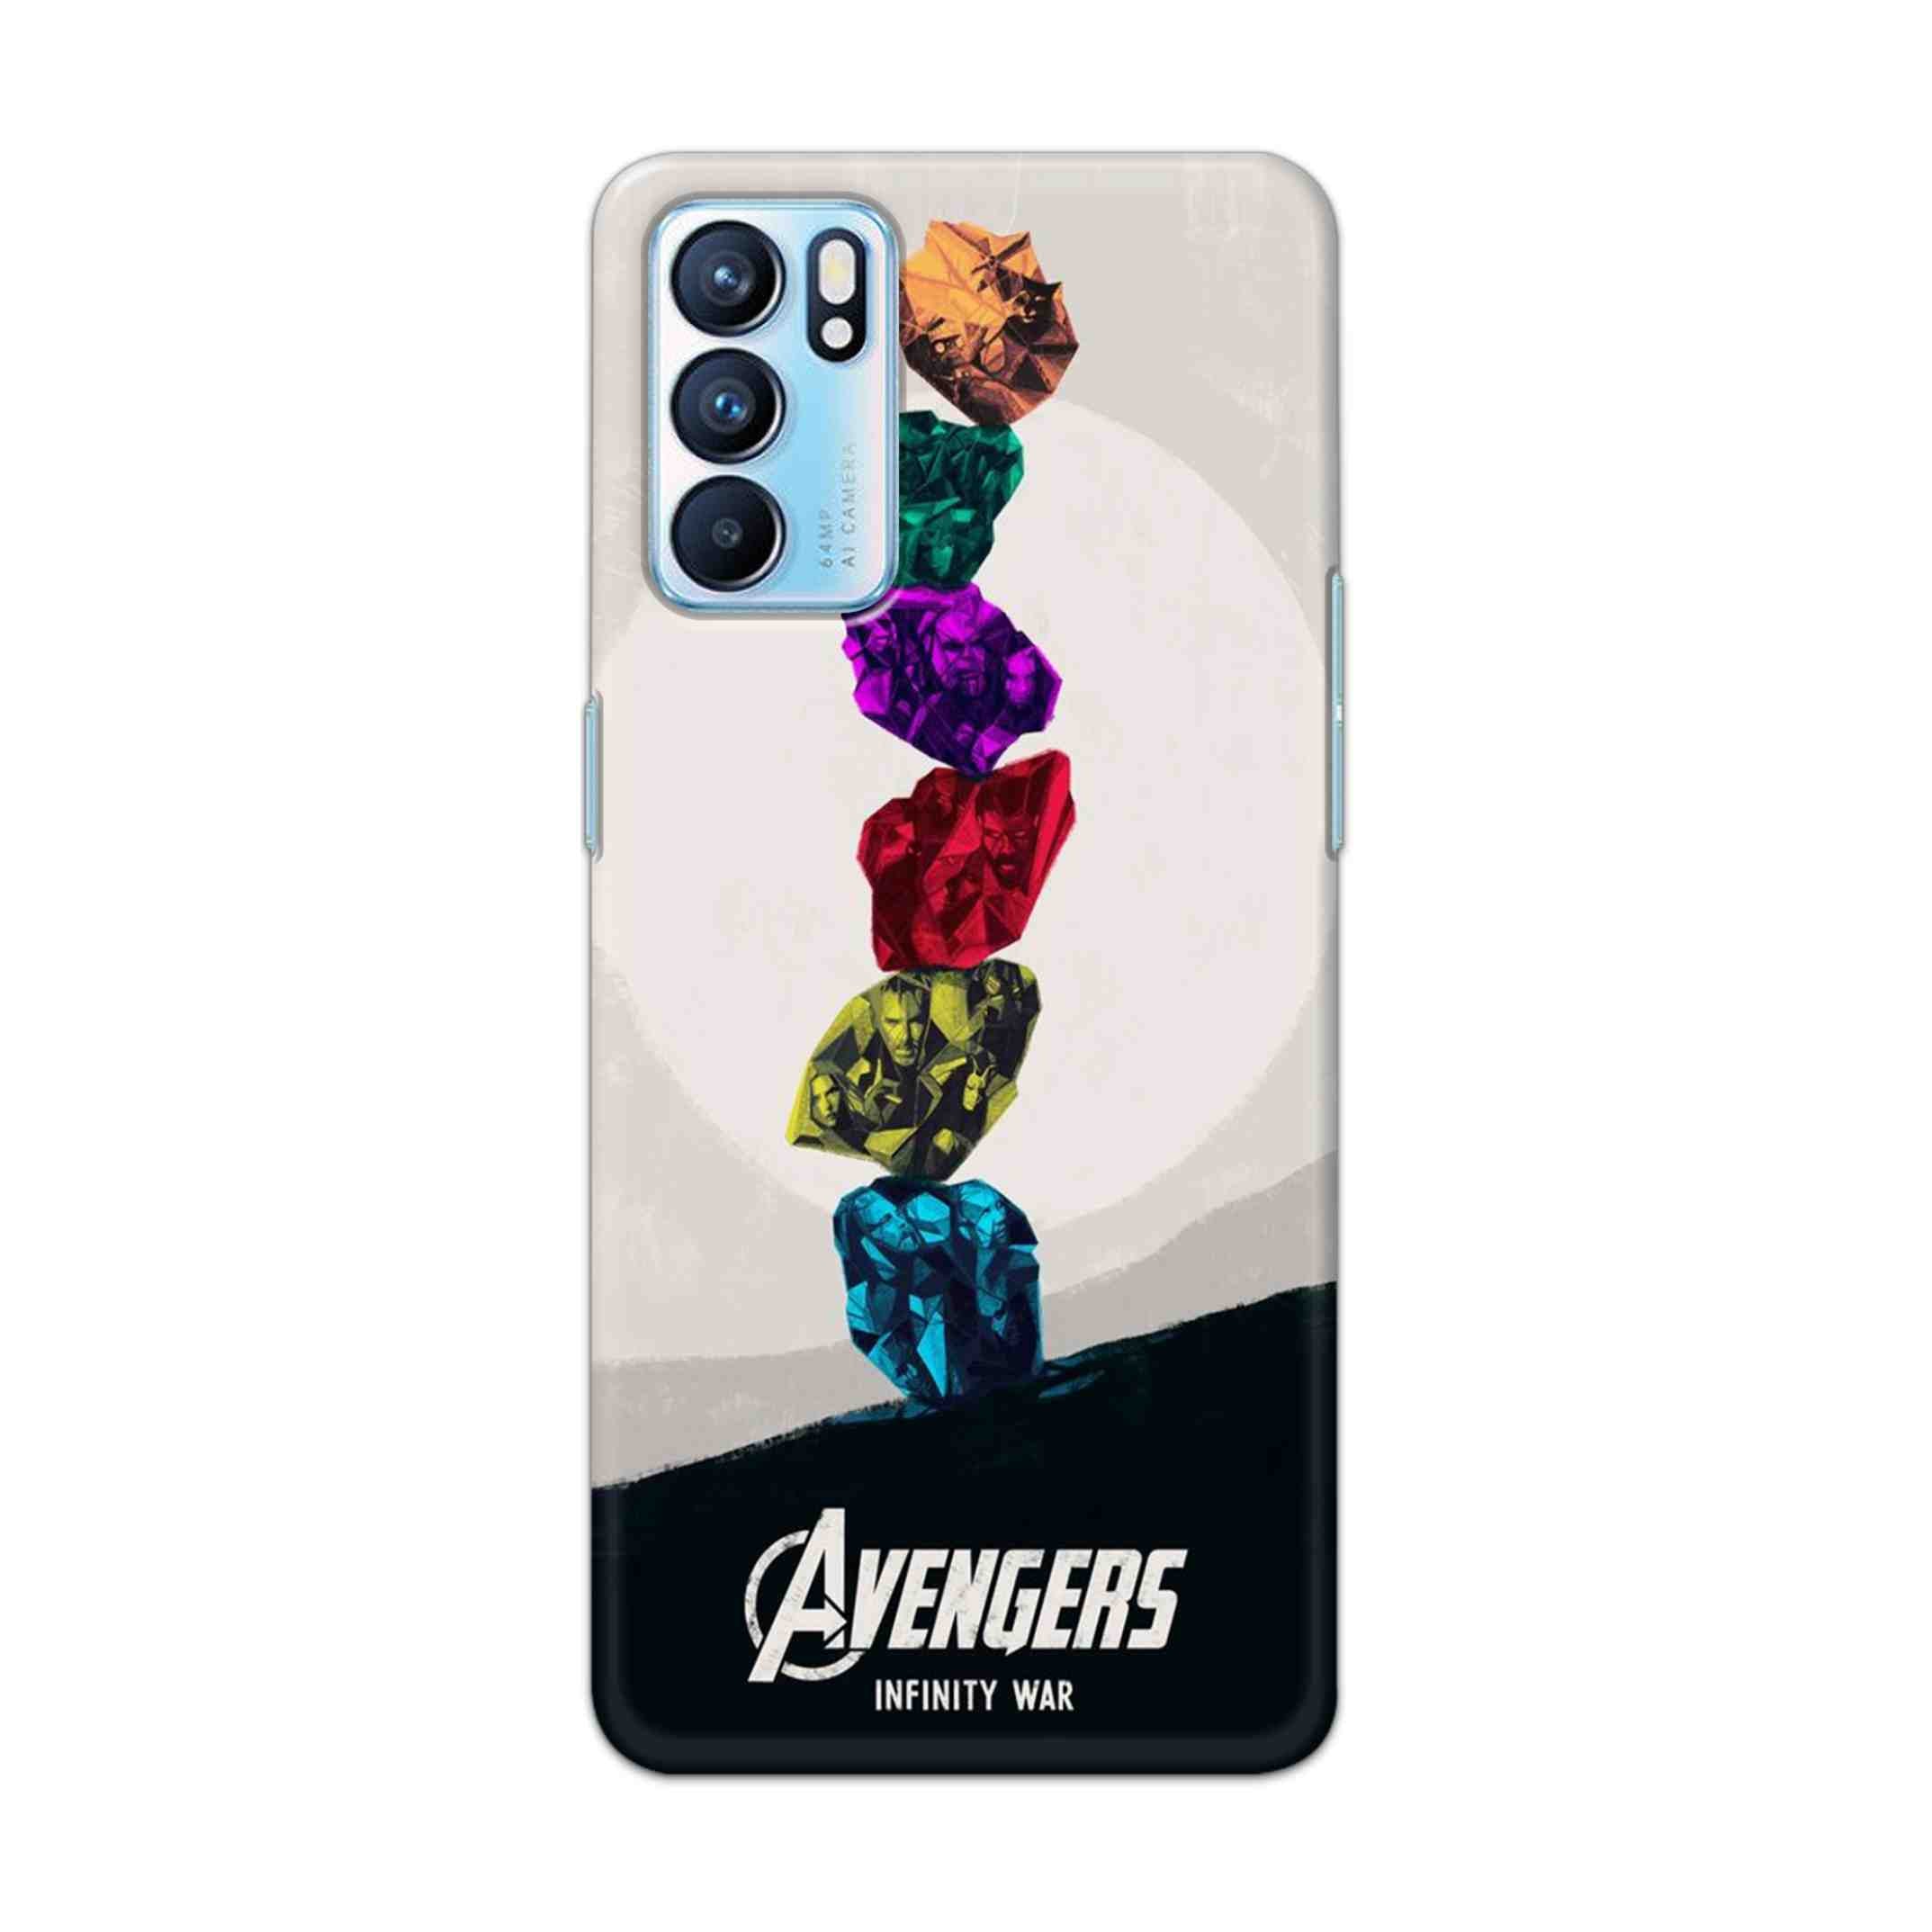 Buy Avengers Stone Hard Back Mobile Phone Case Cover For OPPO RENO 6 Online